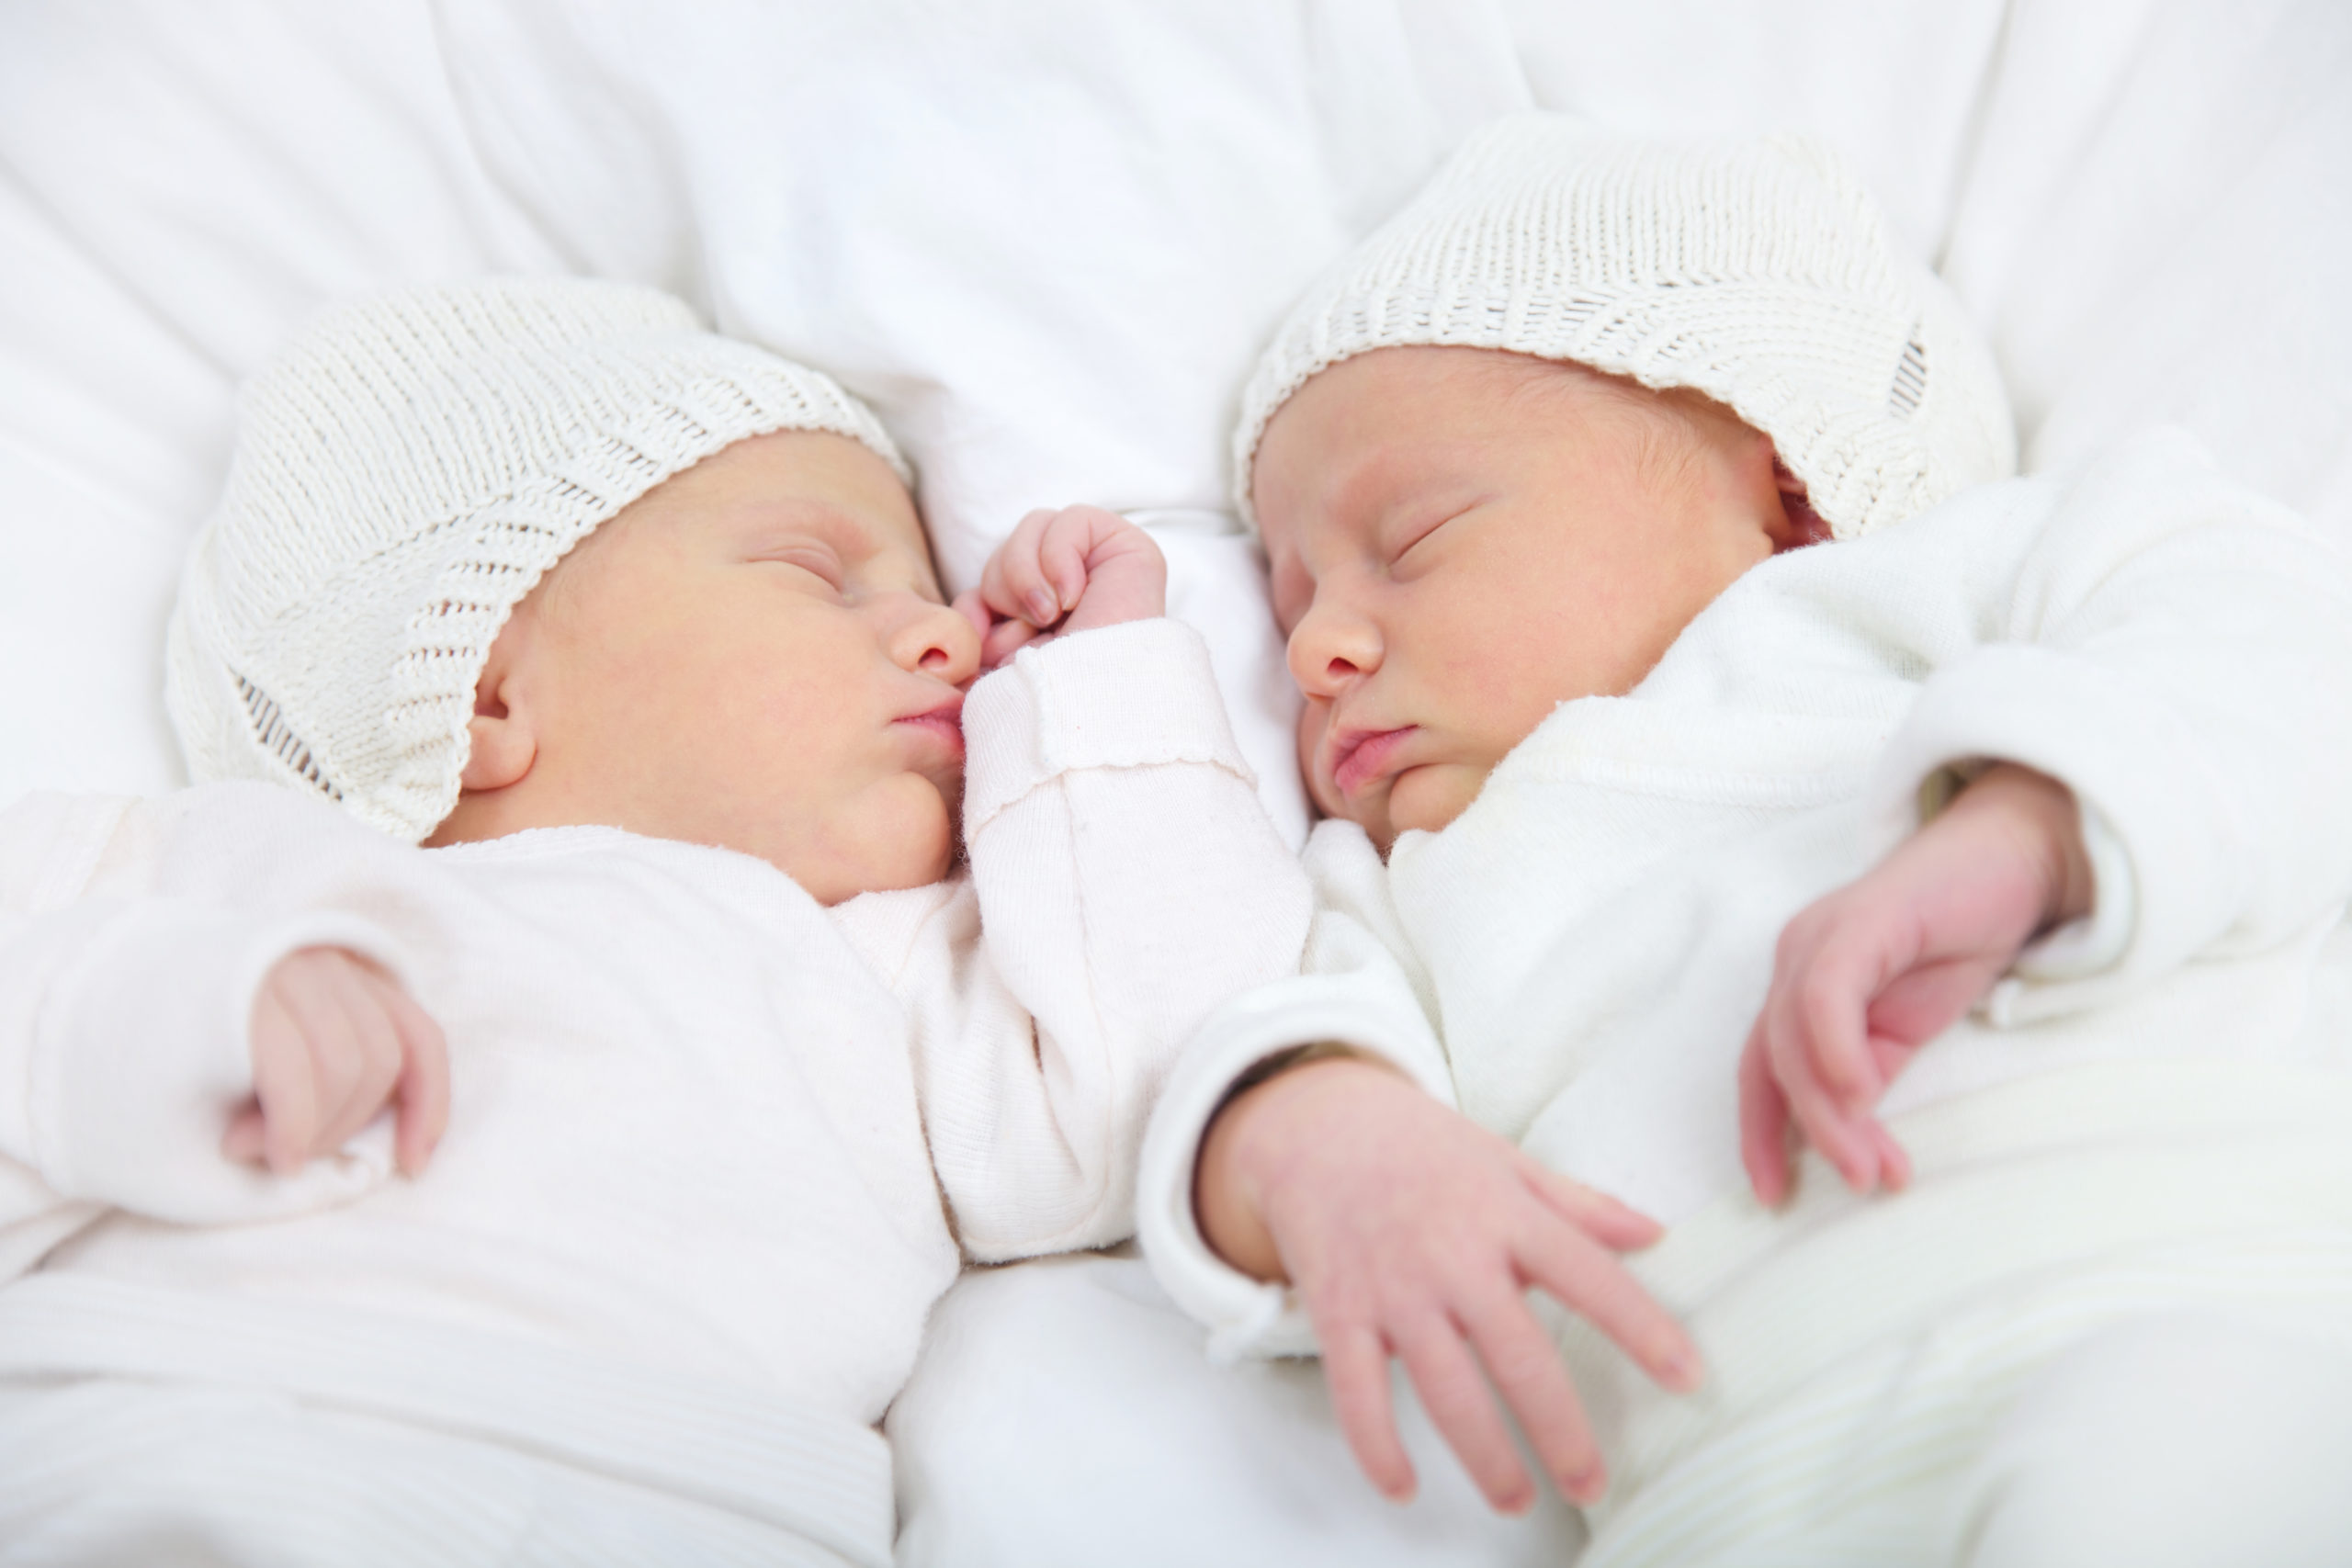 Técnicas de reproducción asistida se centran en evitar embarazos múltiples